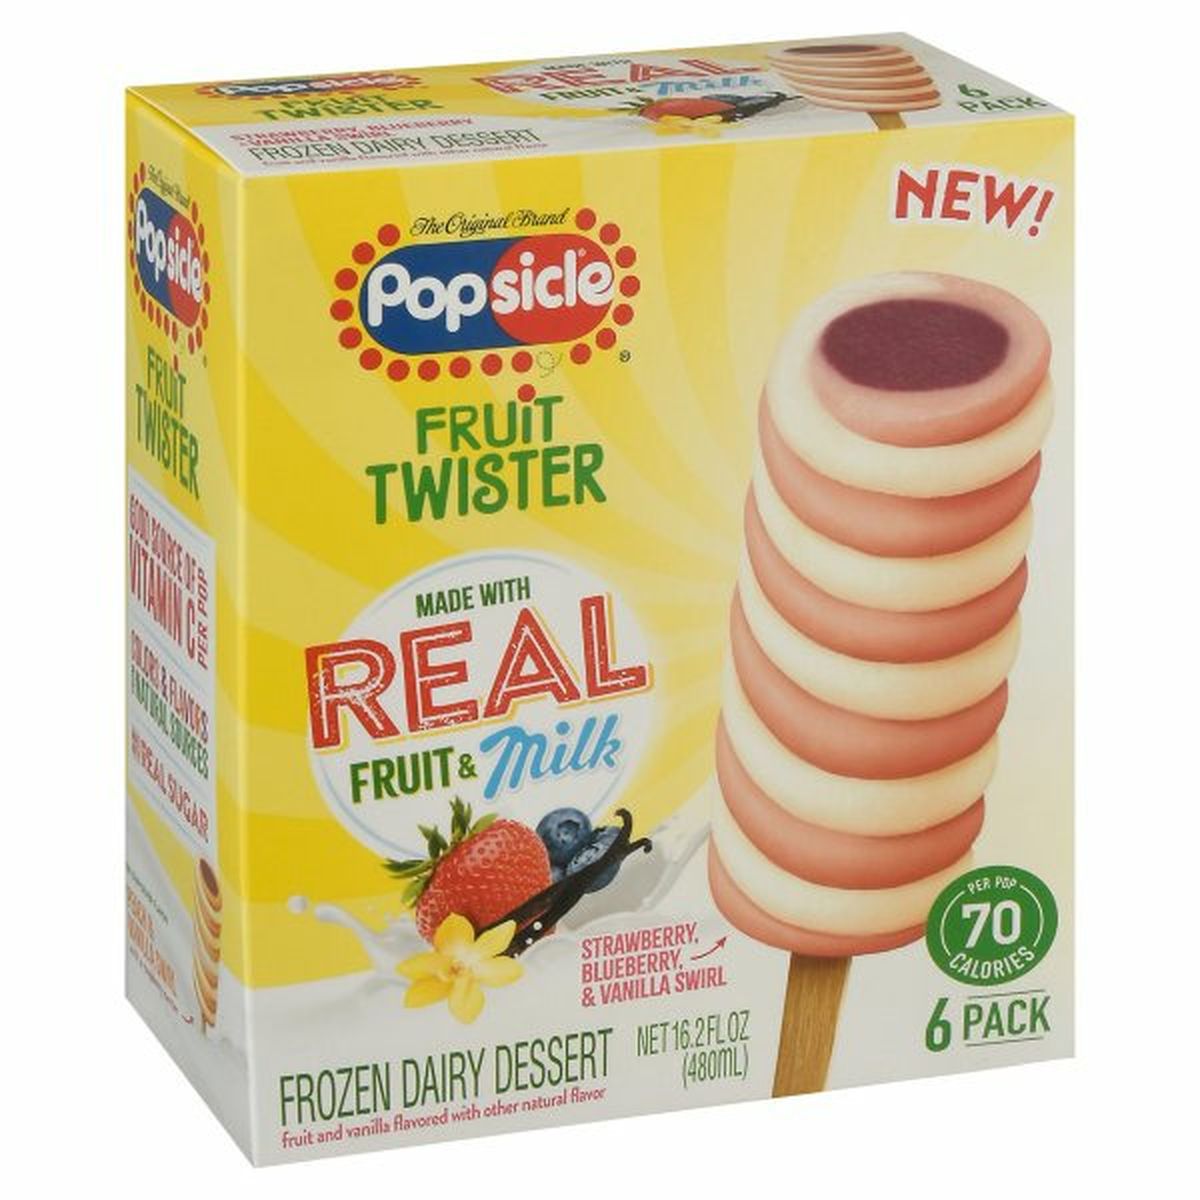 Calories in Popsicle Frozen Dairy Dessert, Strawberry, Blueberry & Vanilla Swirl, Fruit Twister, 6 Pack